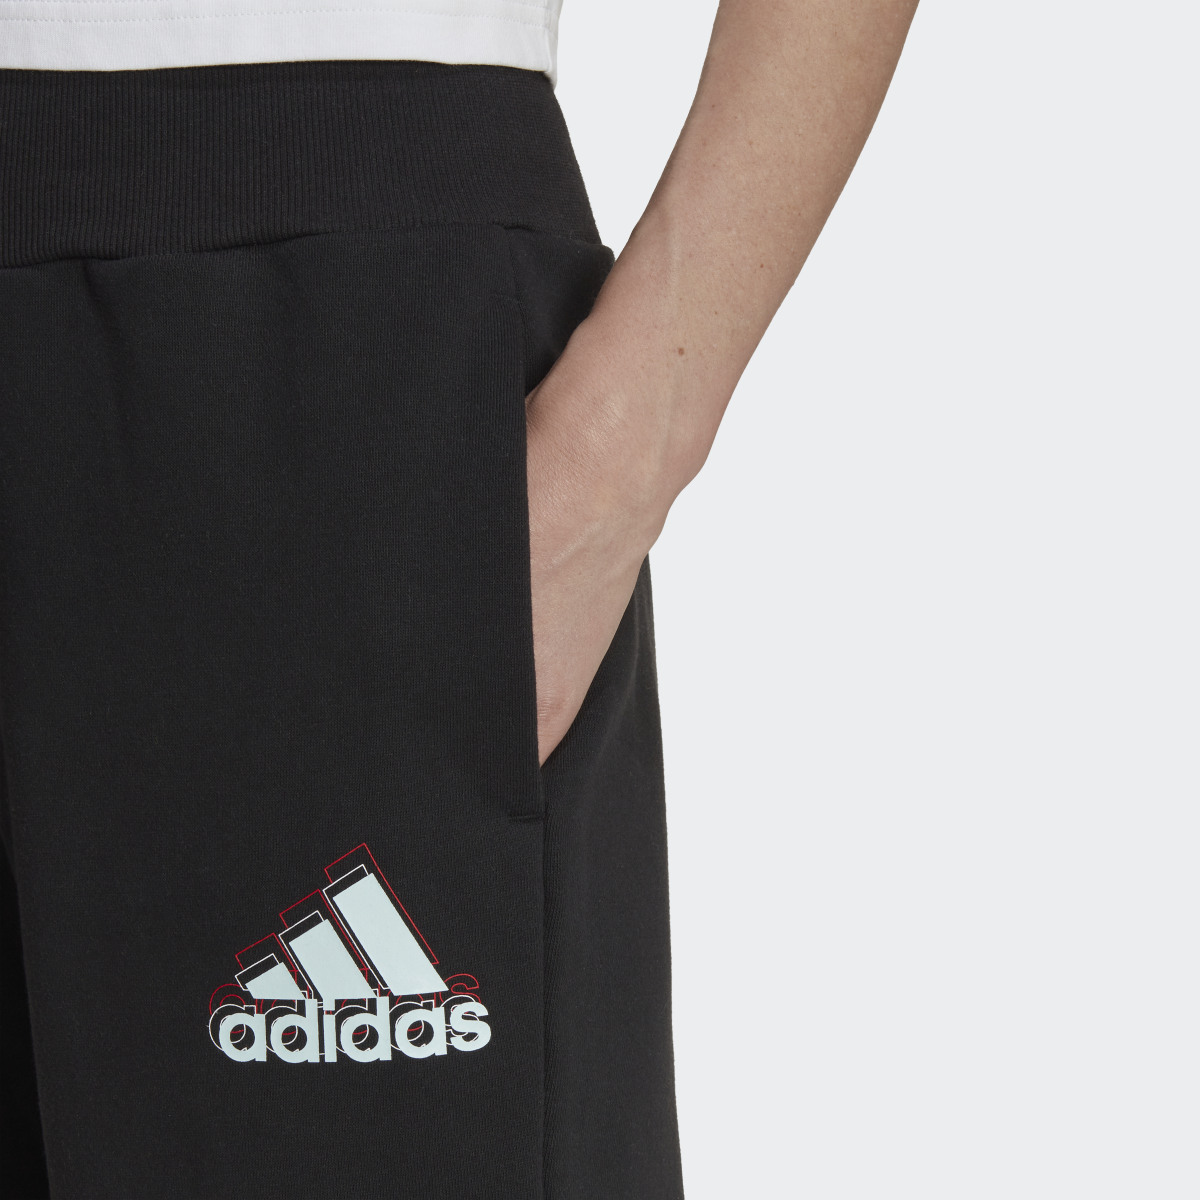 Adidas Essentials Multi-Colored Logo Pants. 5